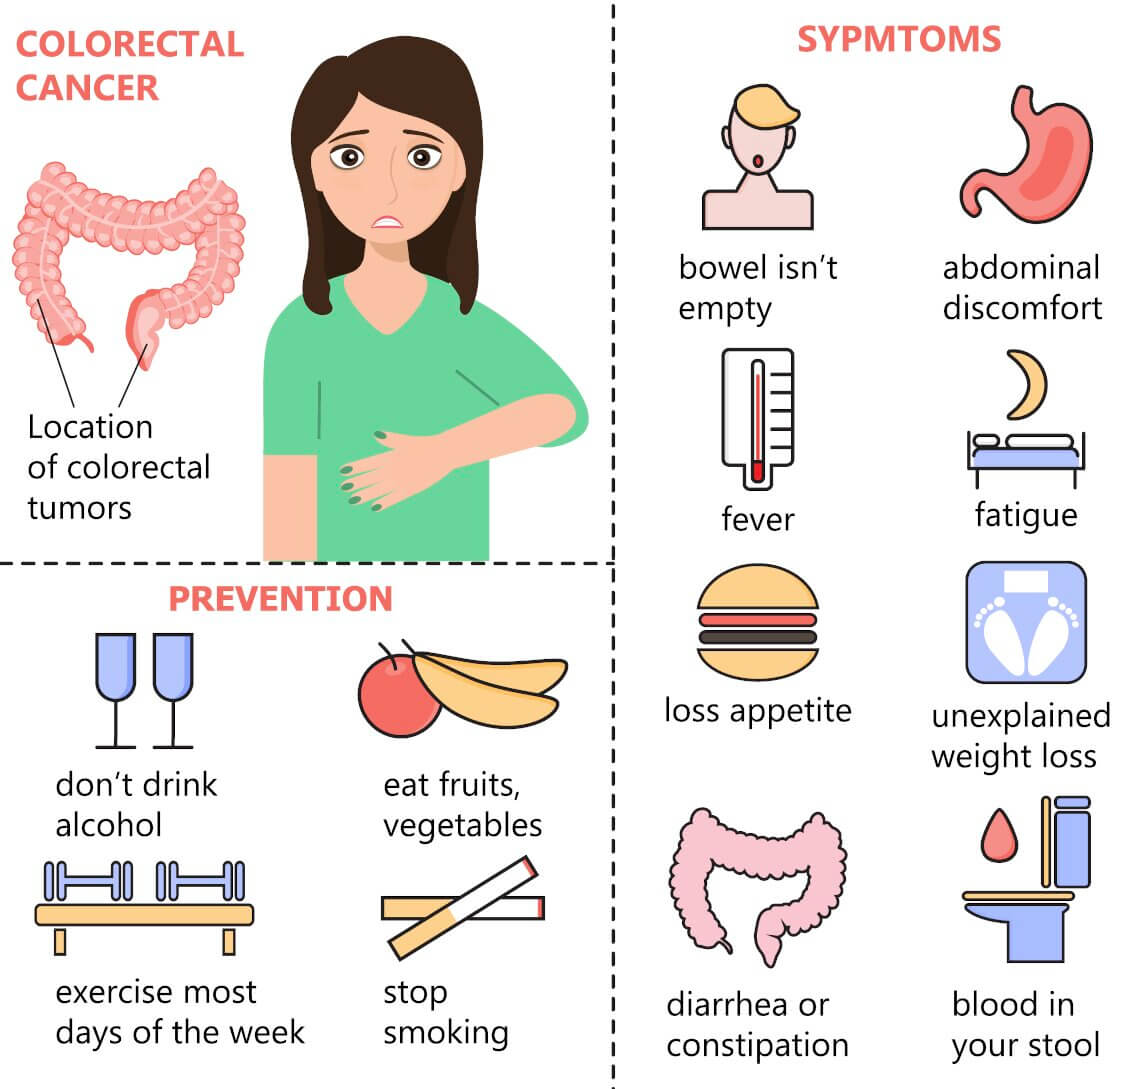 colon and rectal cancer symptoms Margate FL